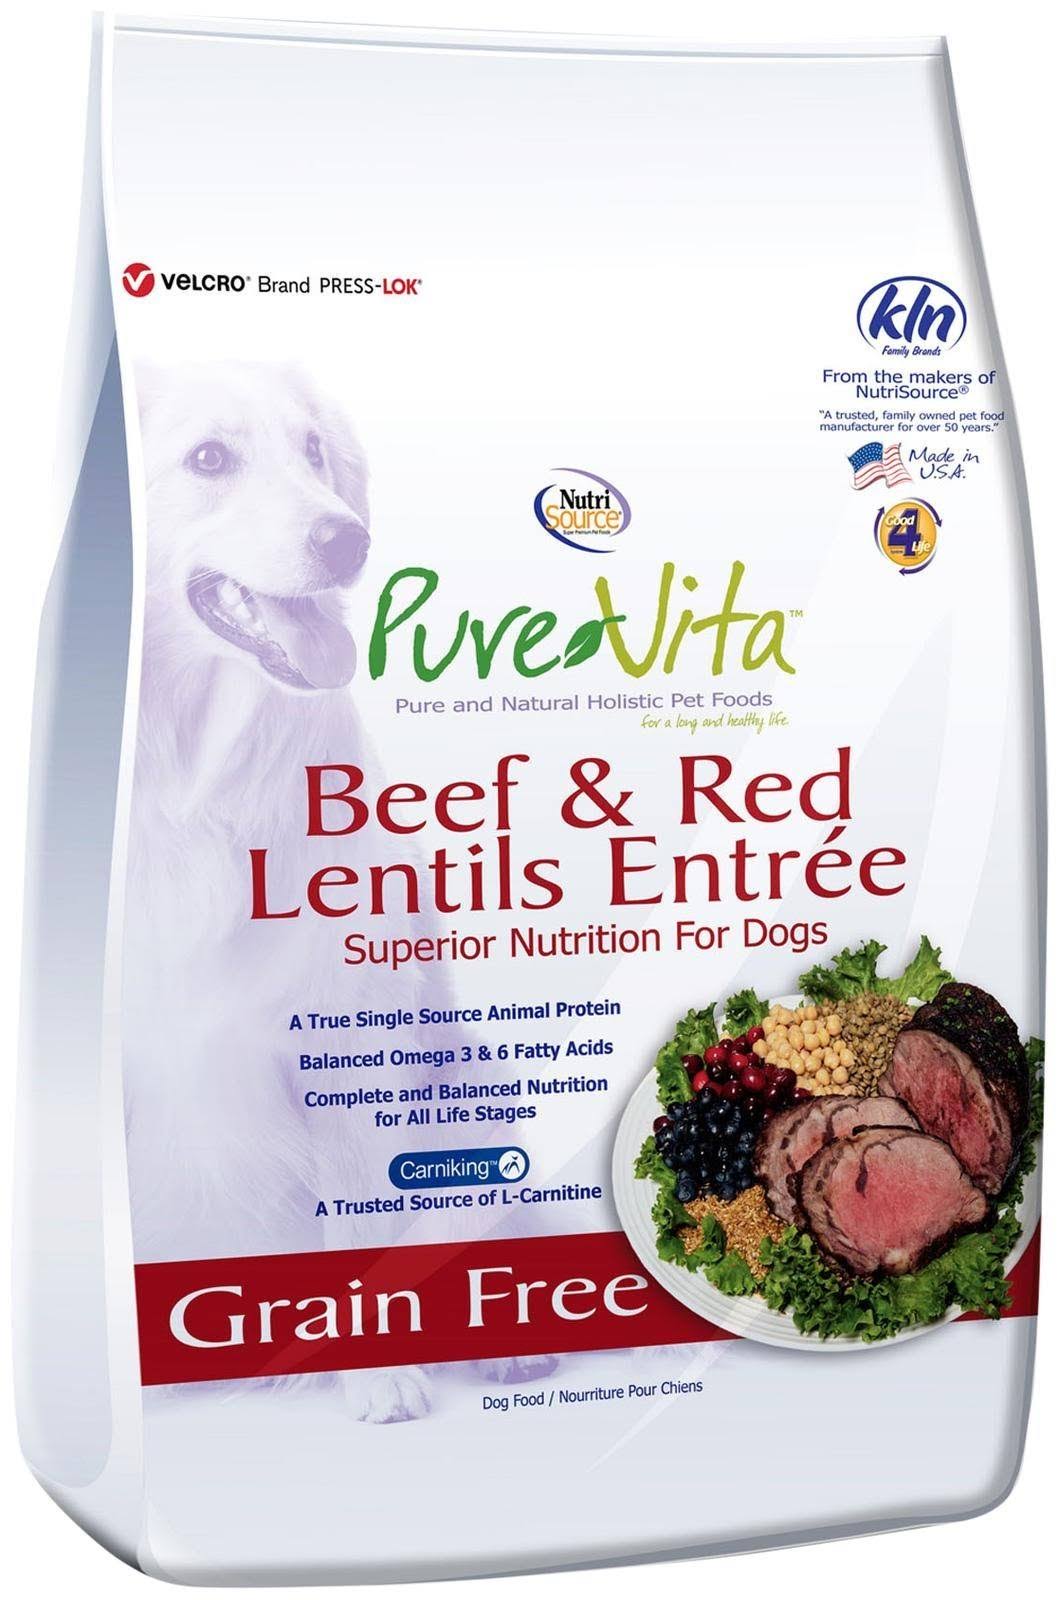 Nutri Source Pure Vita Grain Free Beef & Red Lentils - 25lbs